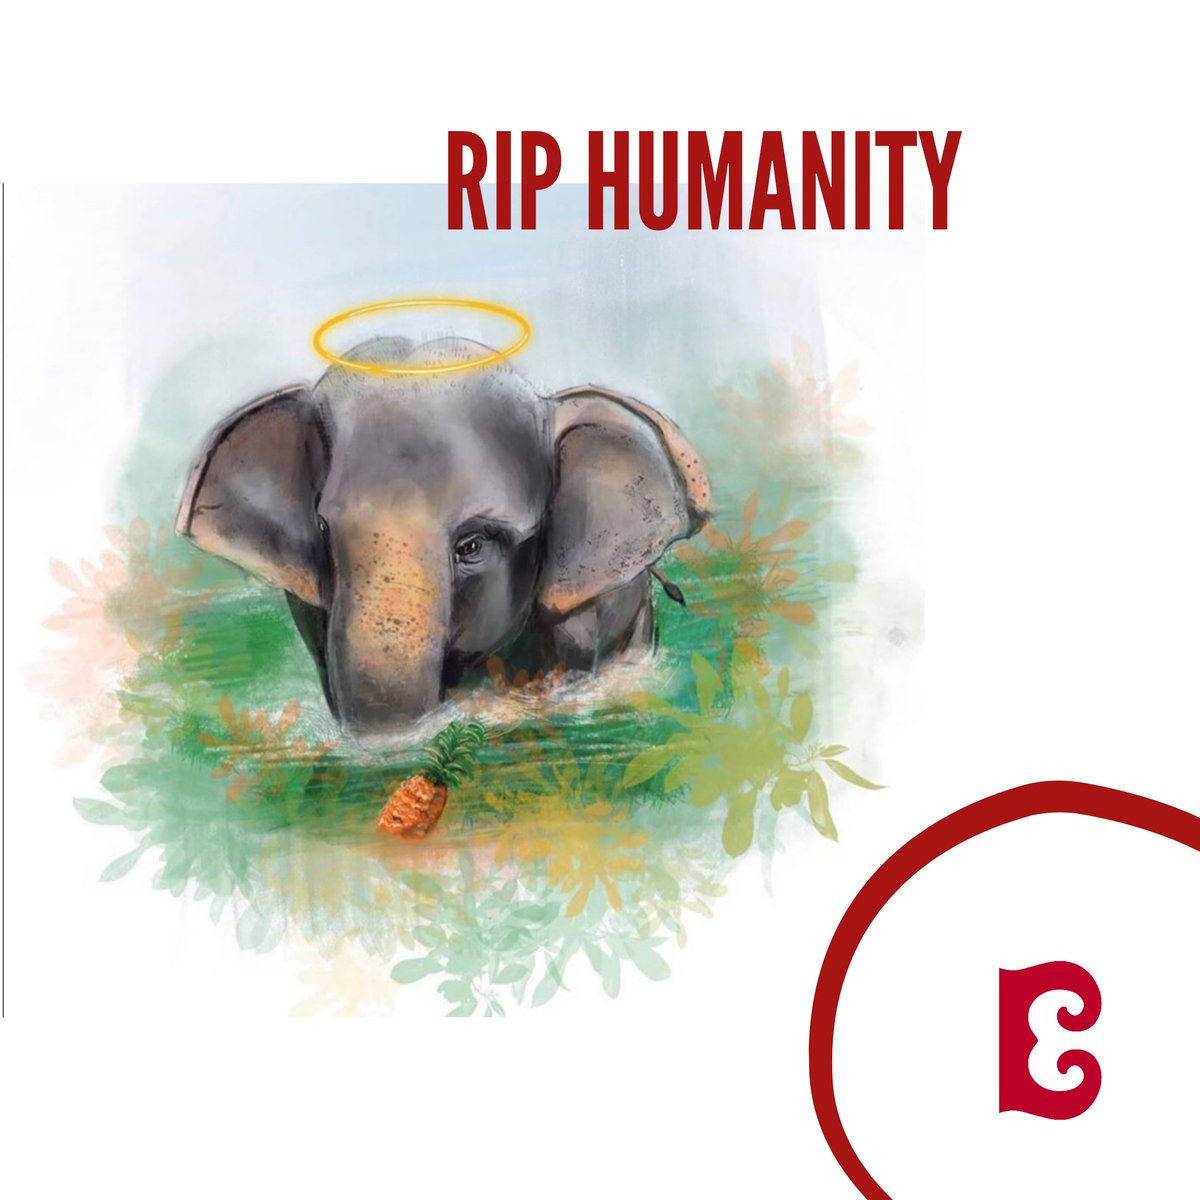 #JusticeForElephant #SayNoToCruelty #RIPHumanity #AnimalCruelty #saveourelephants 🐘